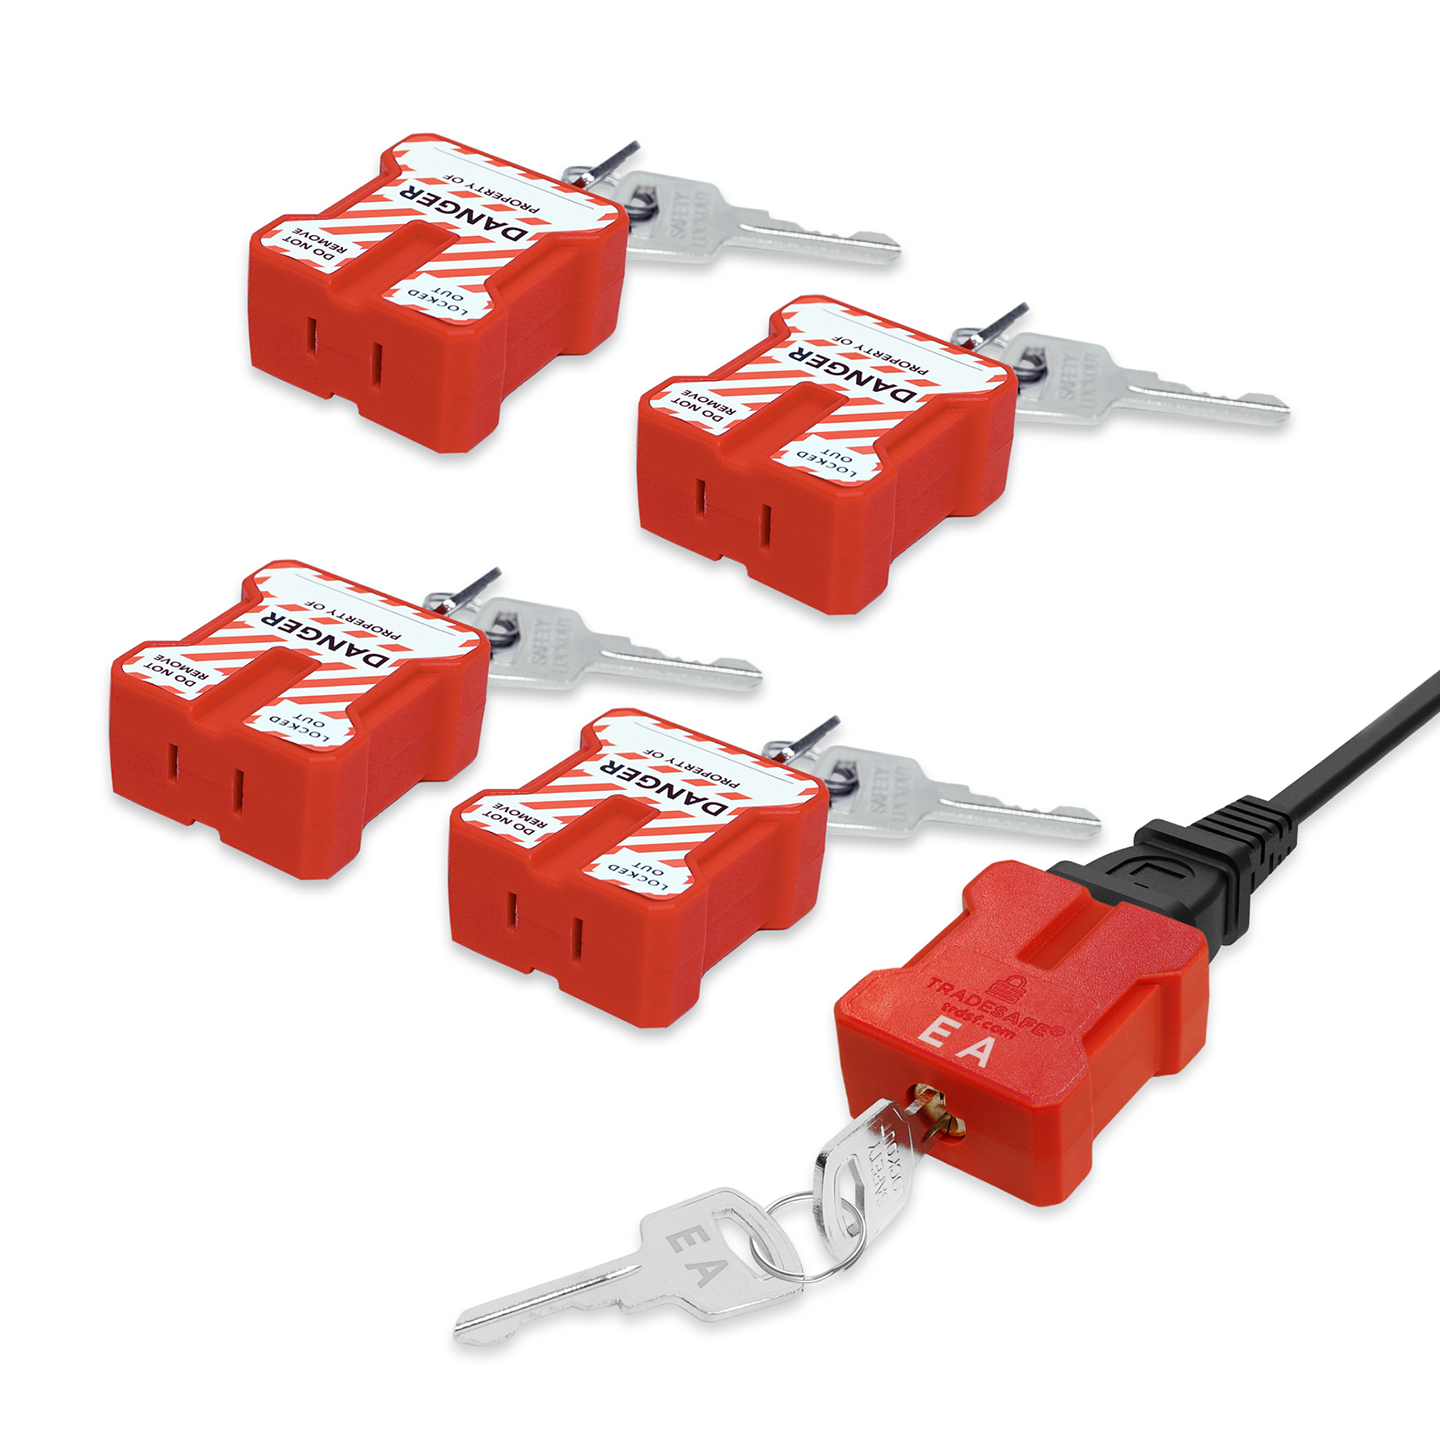 Power Plug Lock Keyed Alike Unlimited - 5 Pack - 2 Keys Each